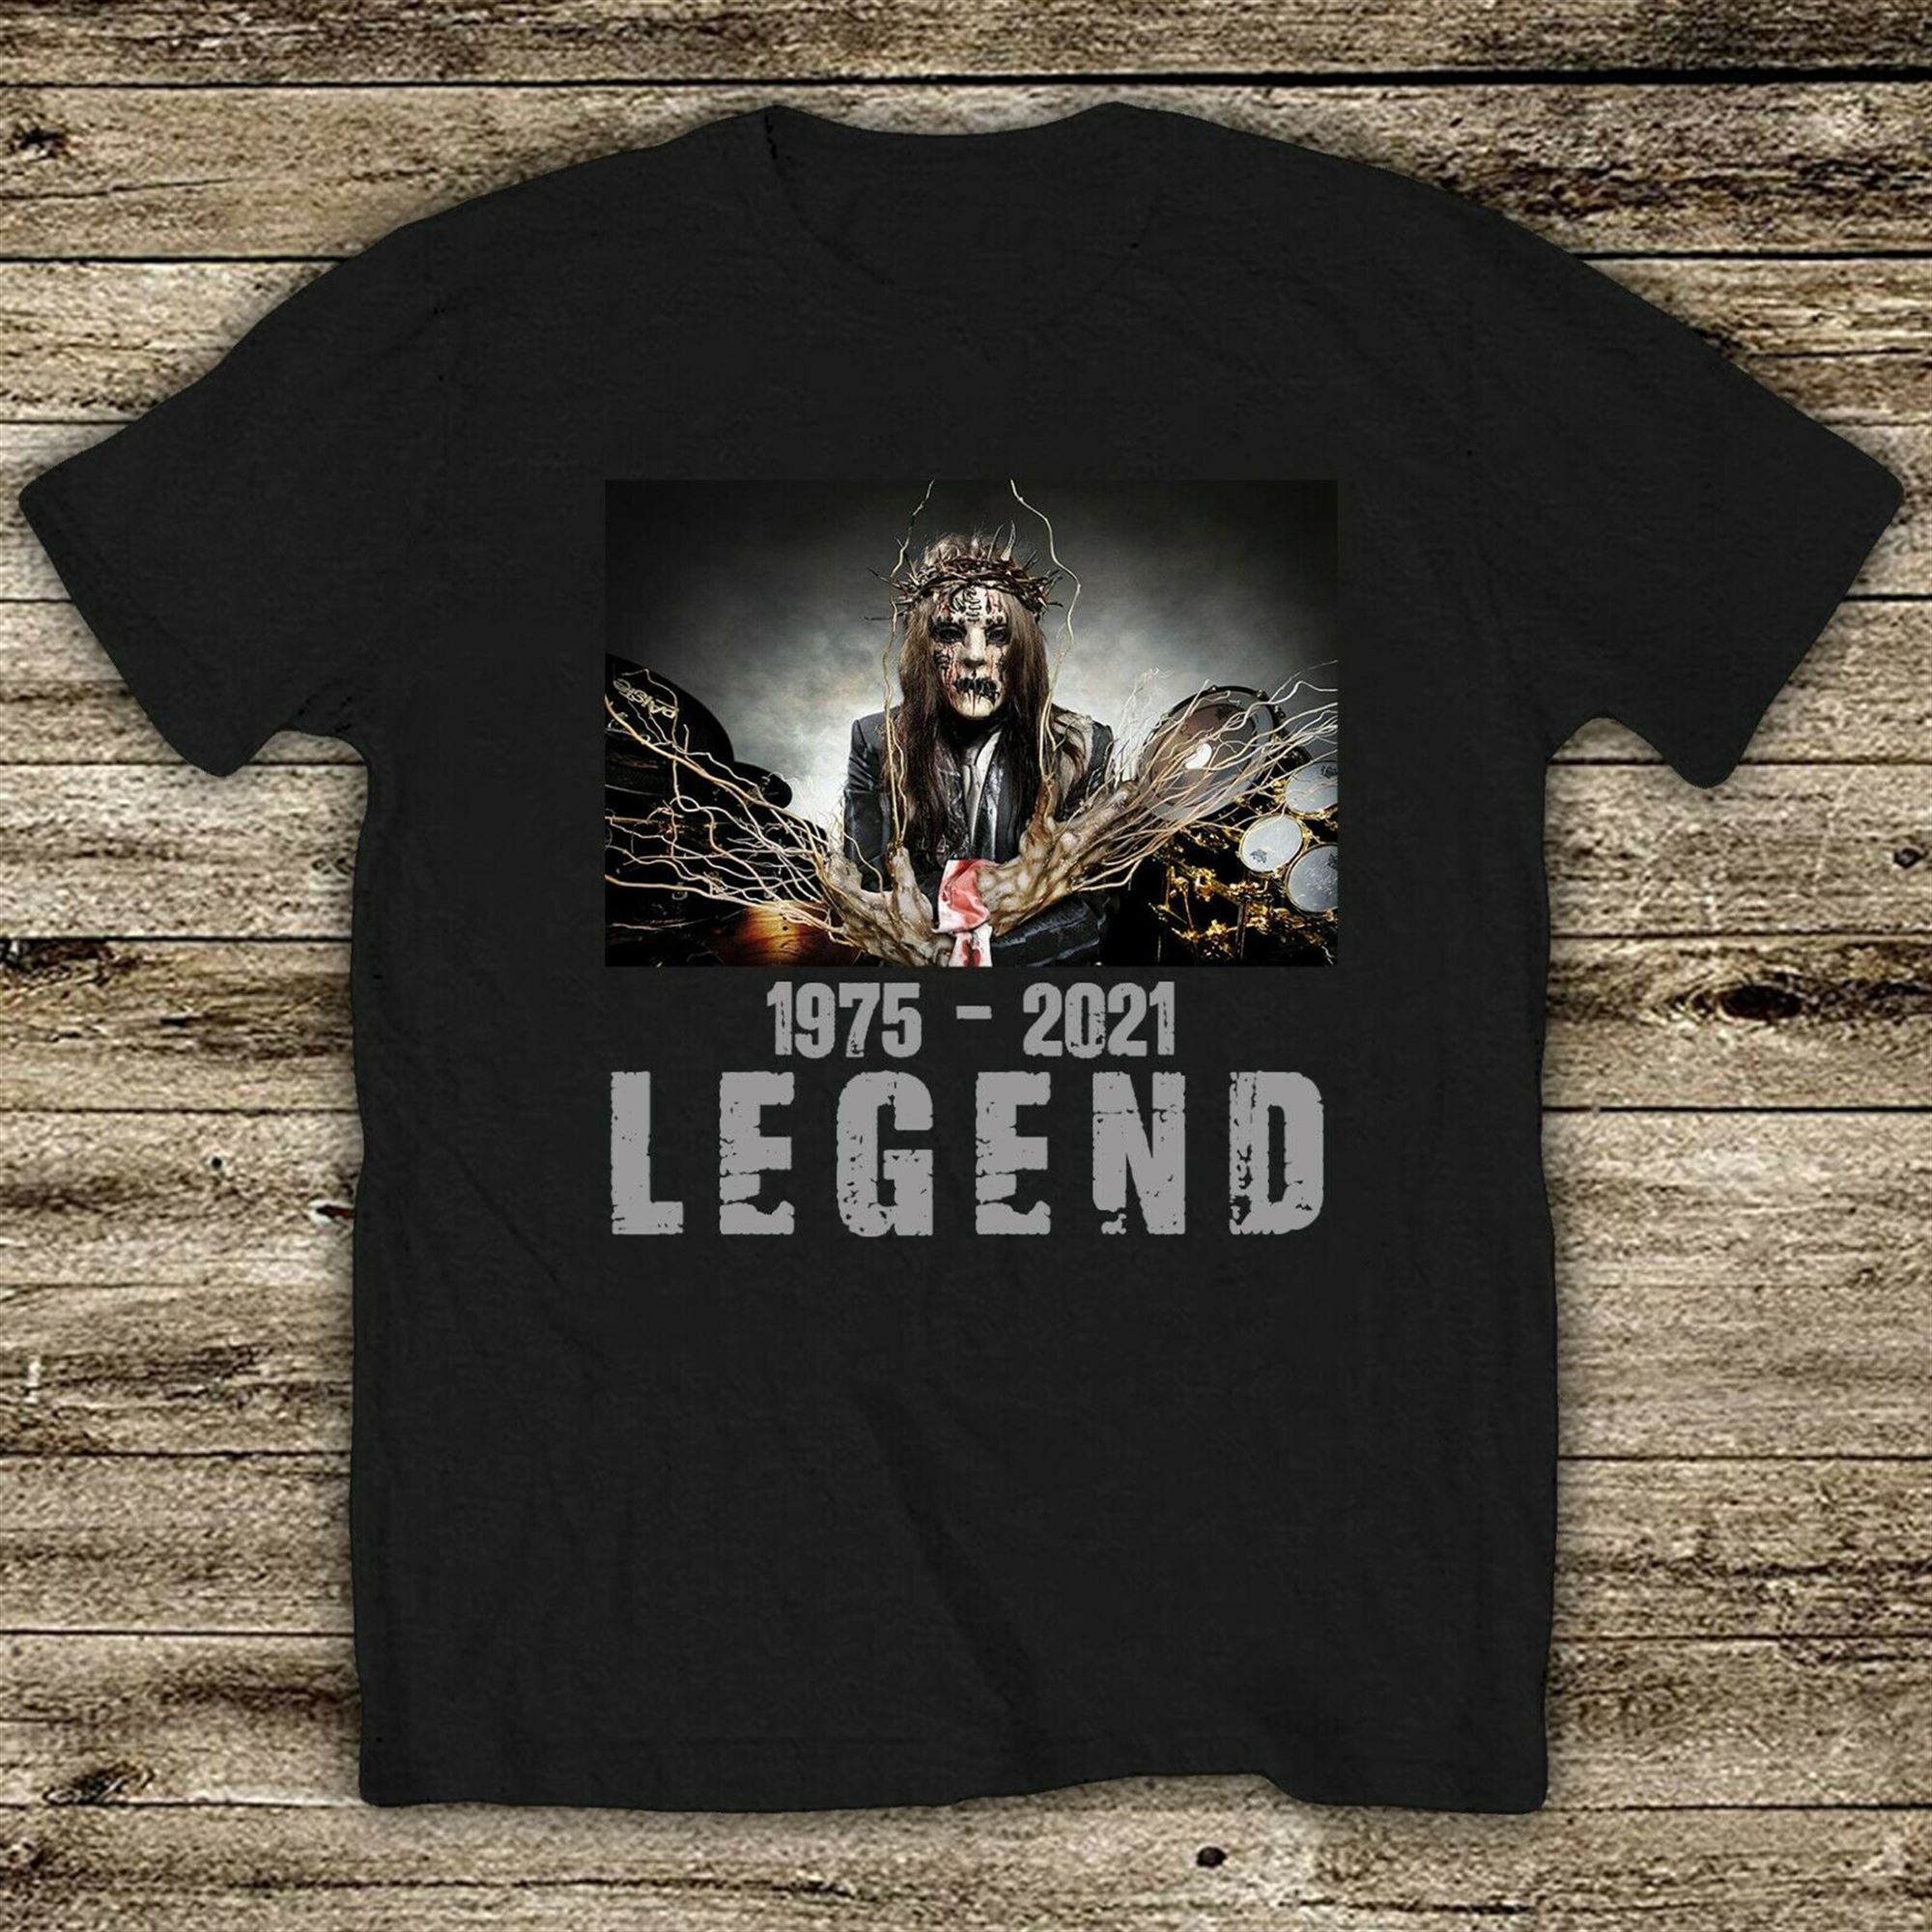 Rip Joey Jordison - Legend Slipknot Music Band Co-founder And Drummer T-shirt